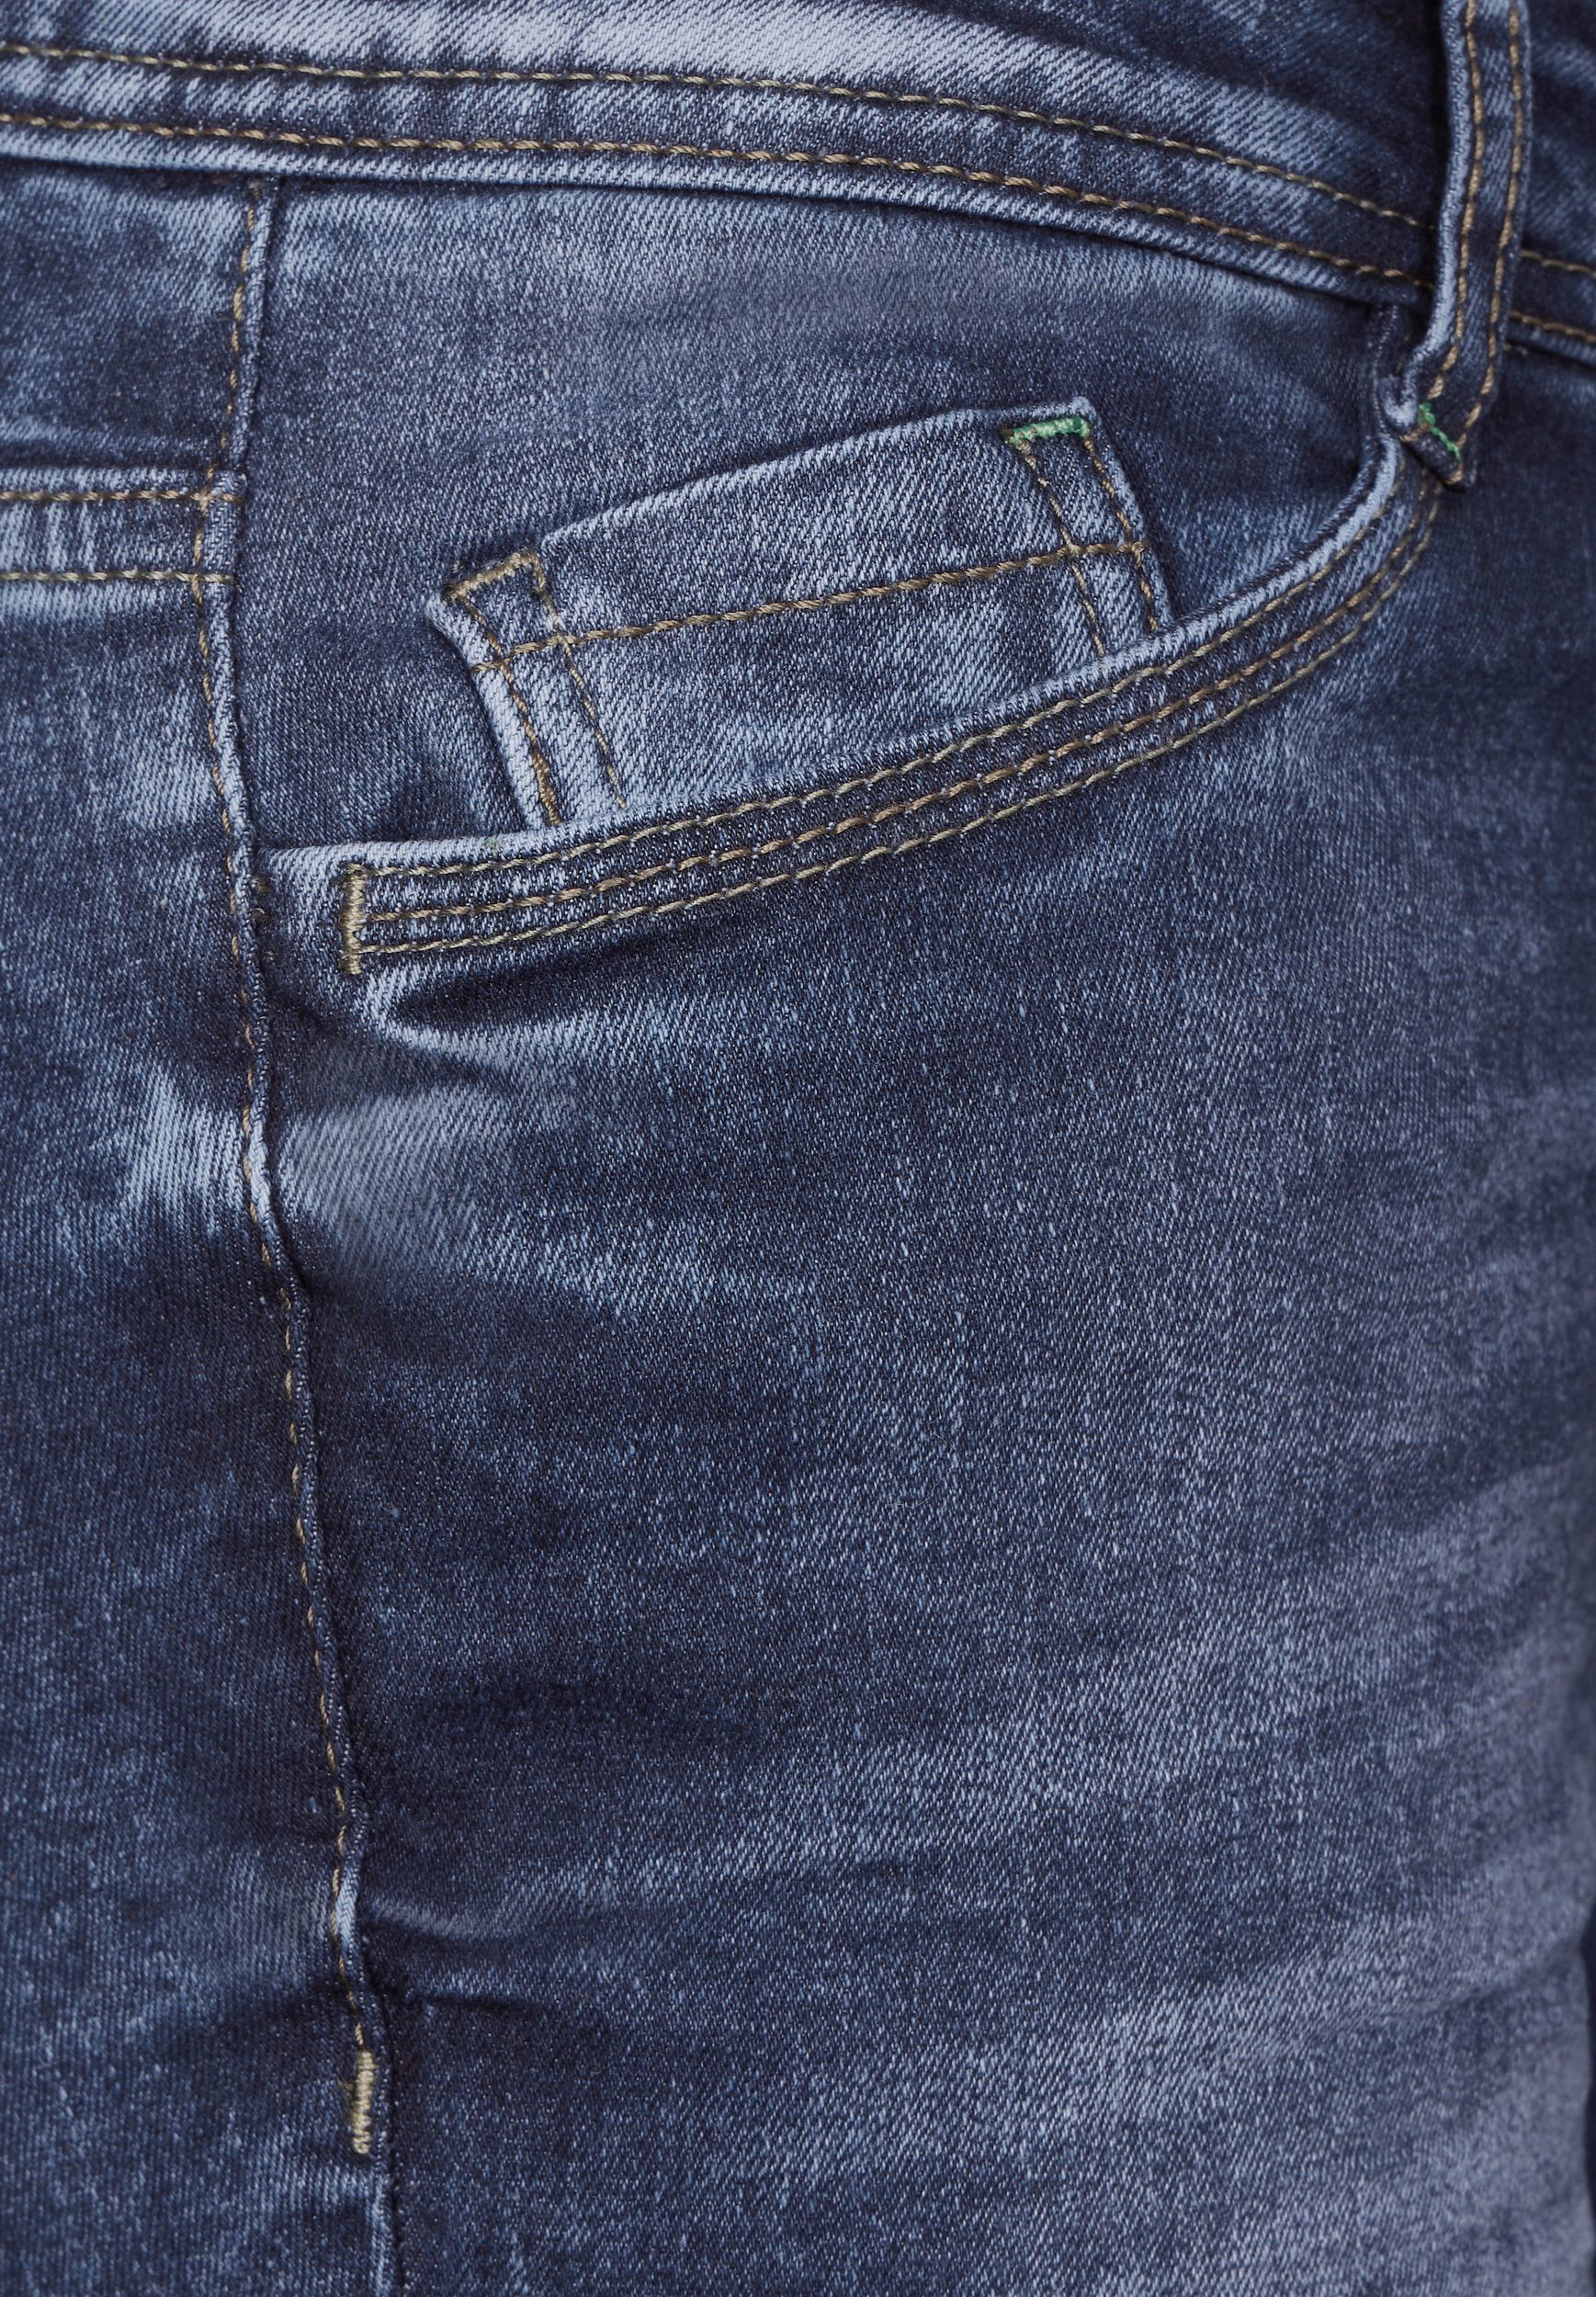 CECIL |  CECIL Slim Jeans  | 33/28 | mid blue wash